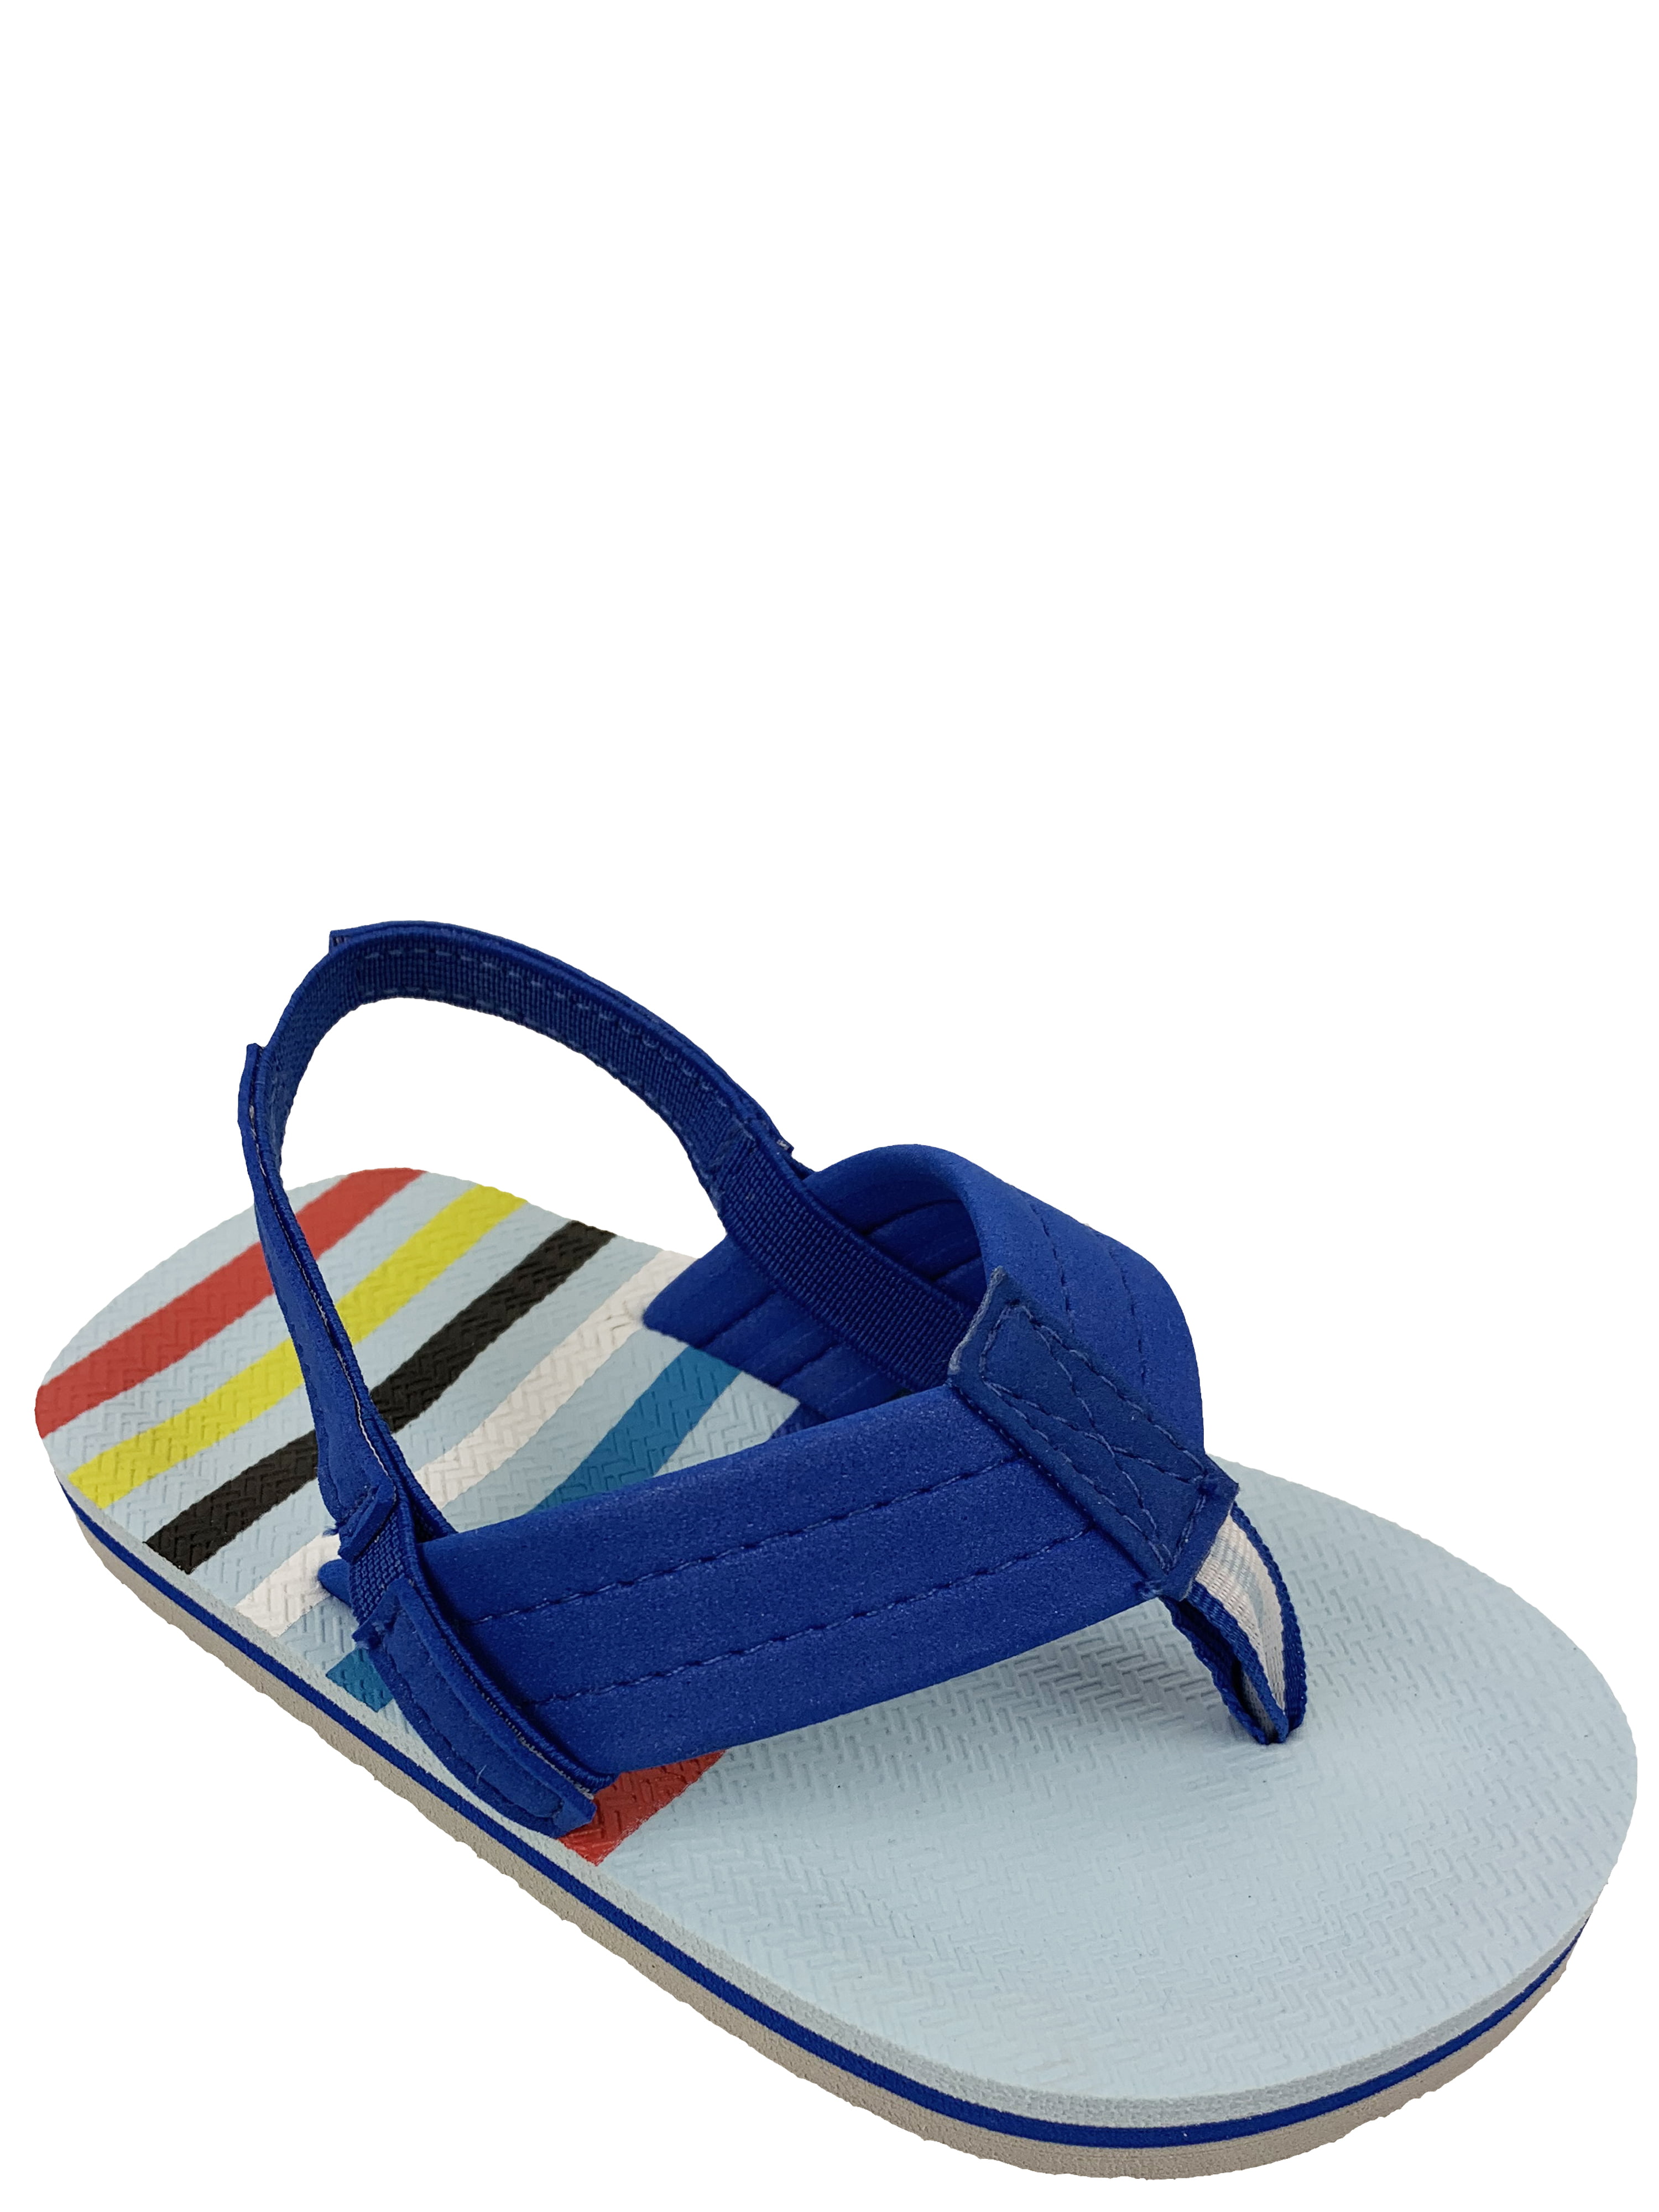 Toddler Boys' Flip Flop Sandal, Colored Stripes w/ Heel Strap, Casual ...